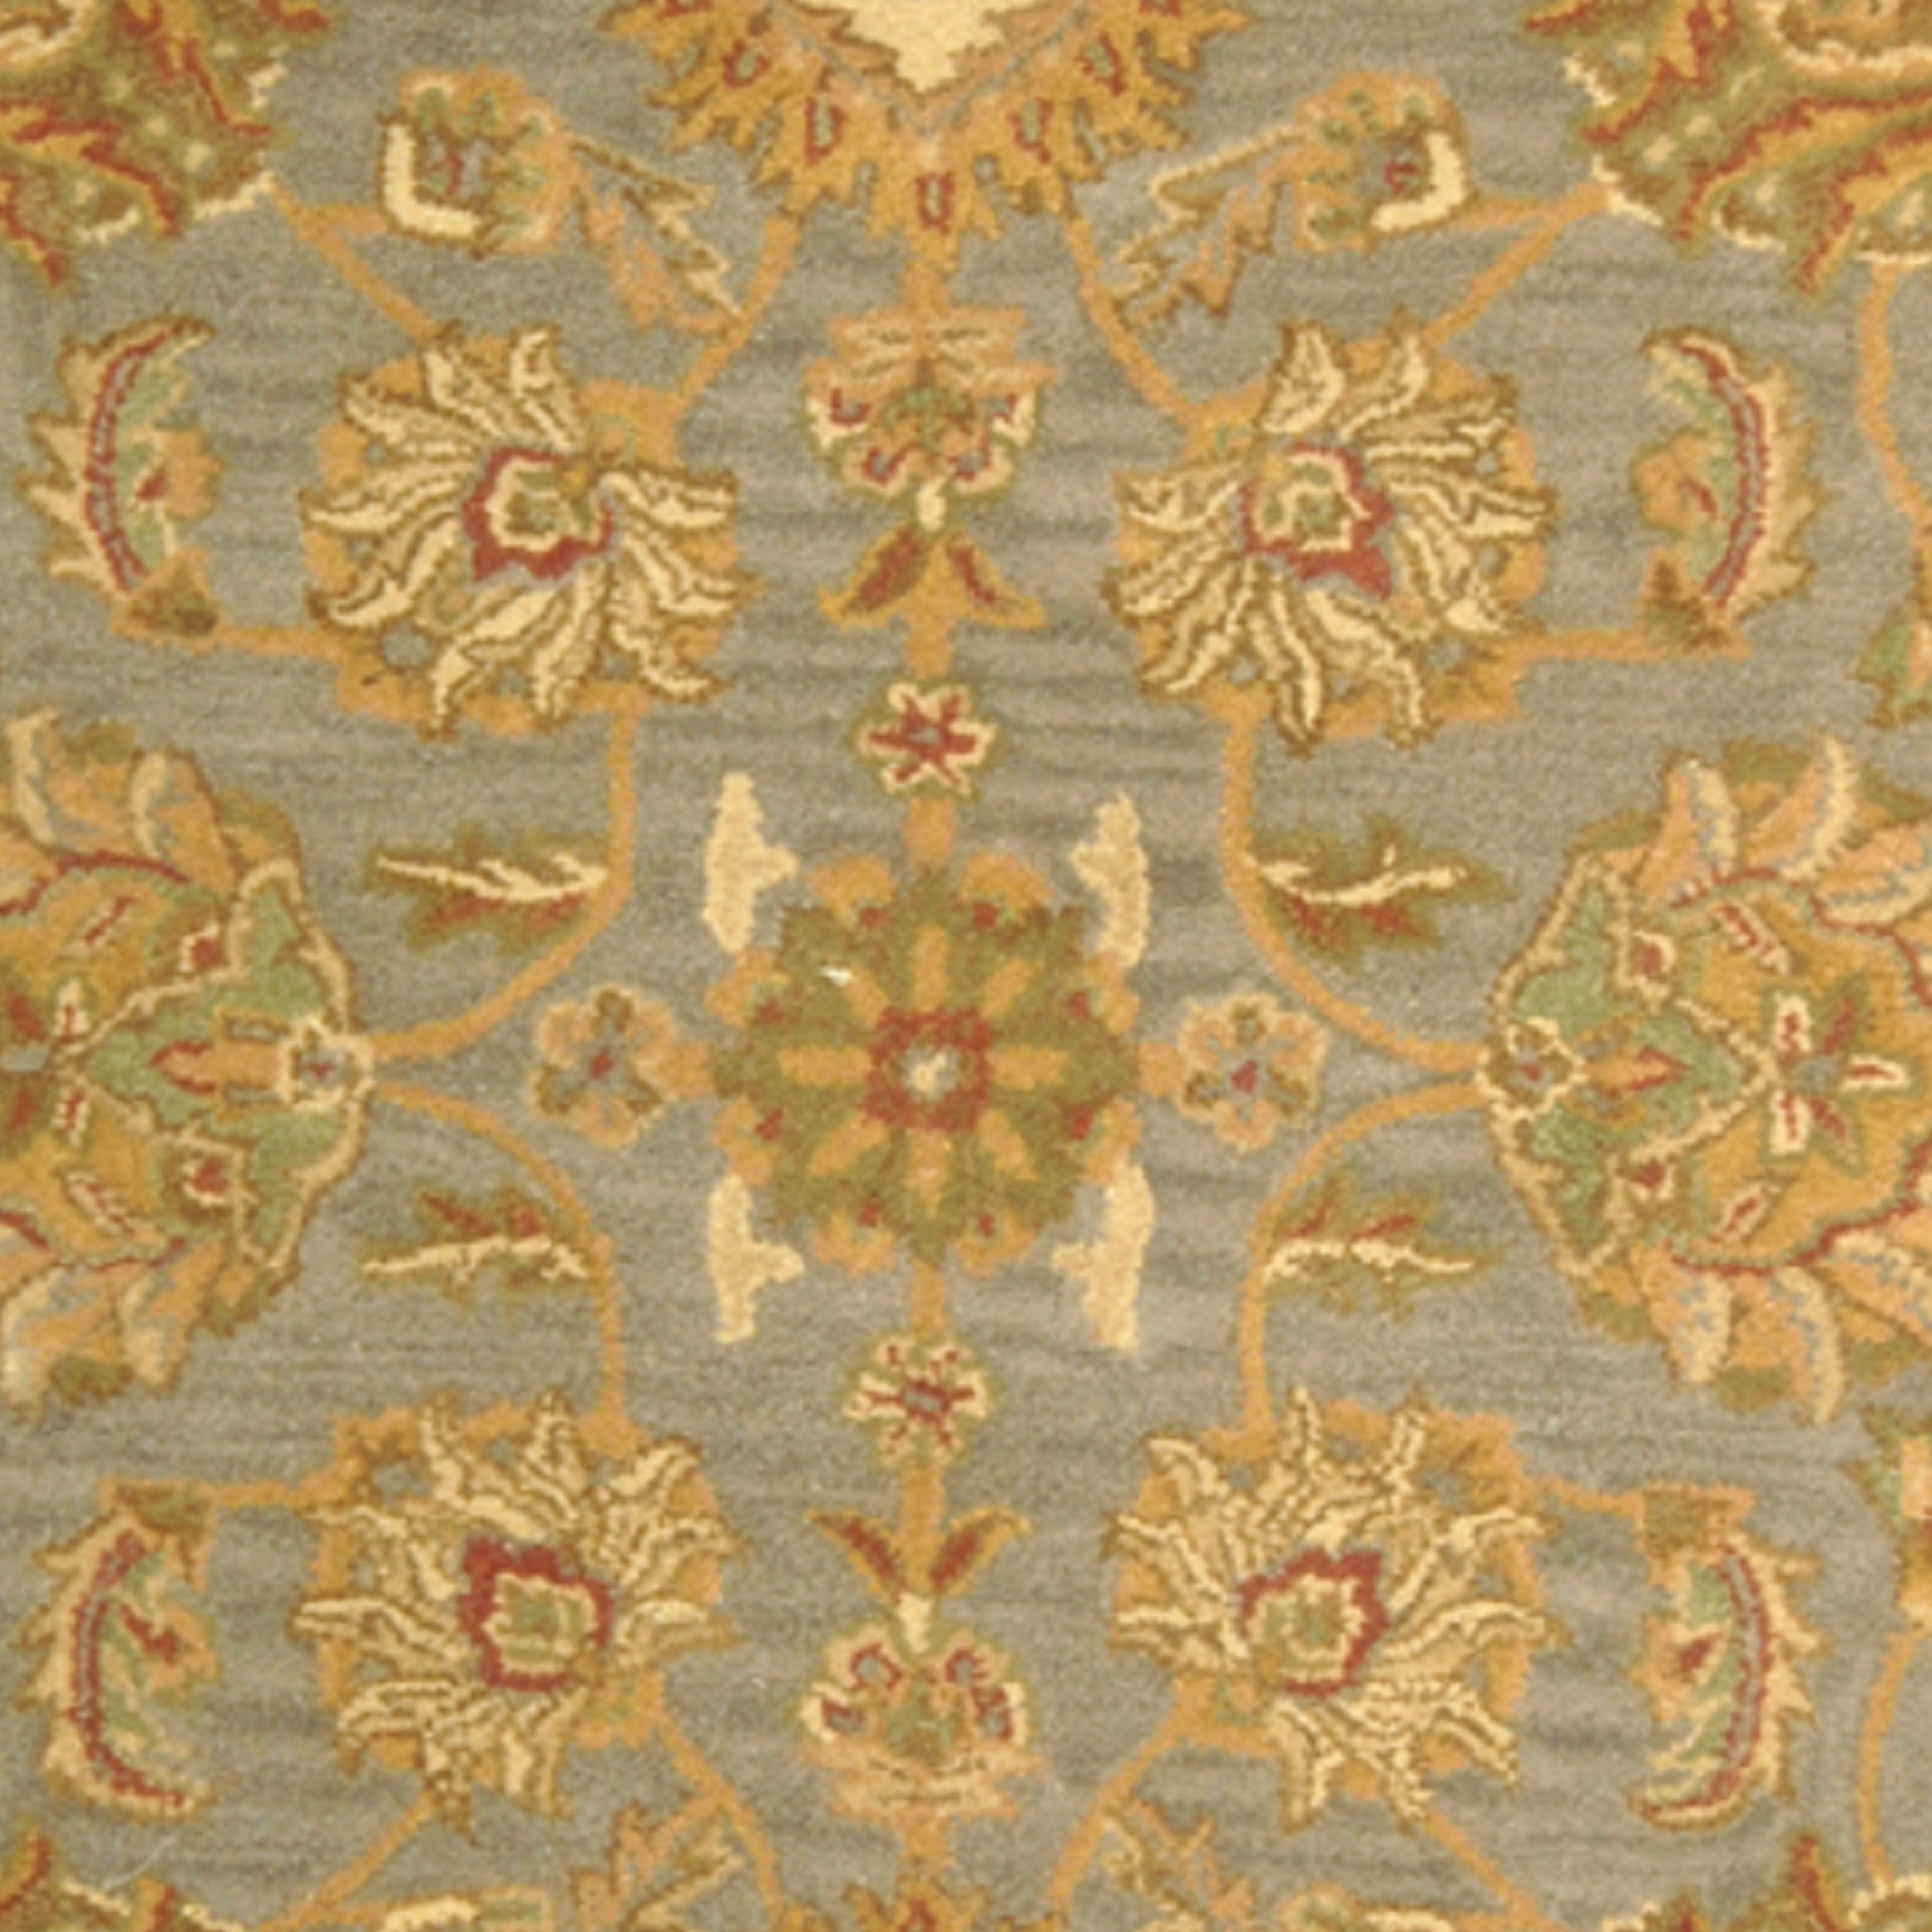 SAFAVIEH Heritage Regis Traditional Wool Area Rug, Blue/Beige, 7'6" x 9'6" Oval - image 3 of 4